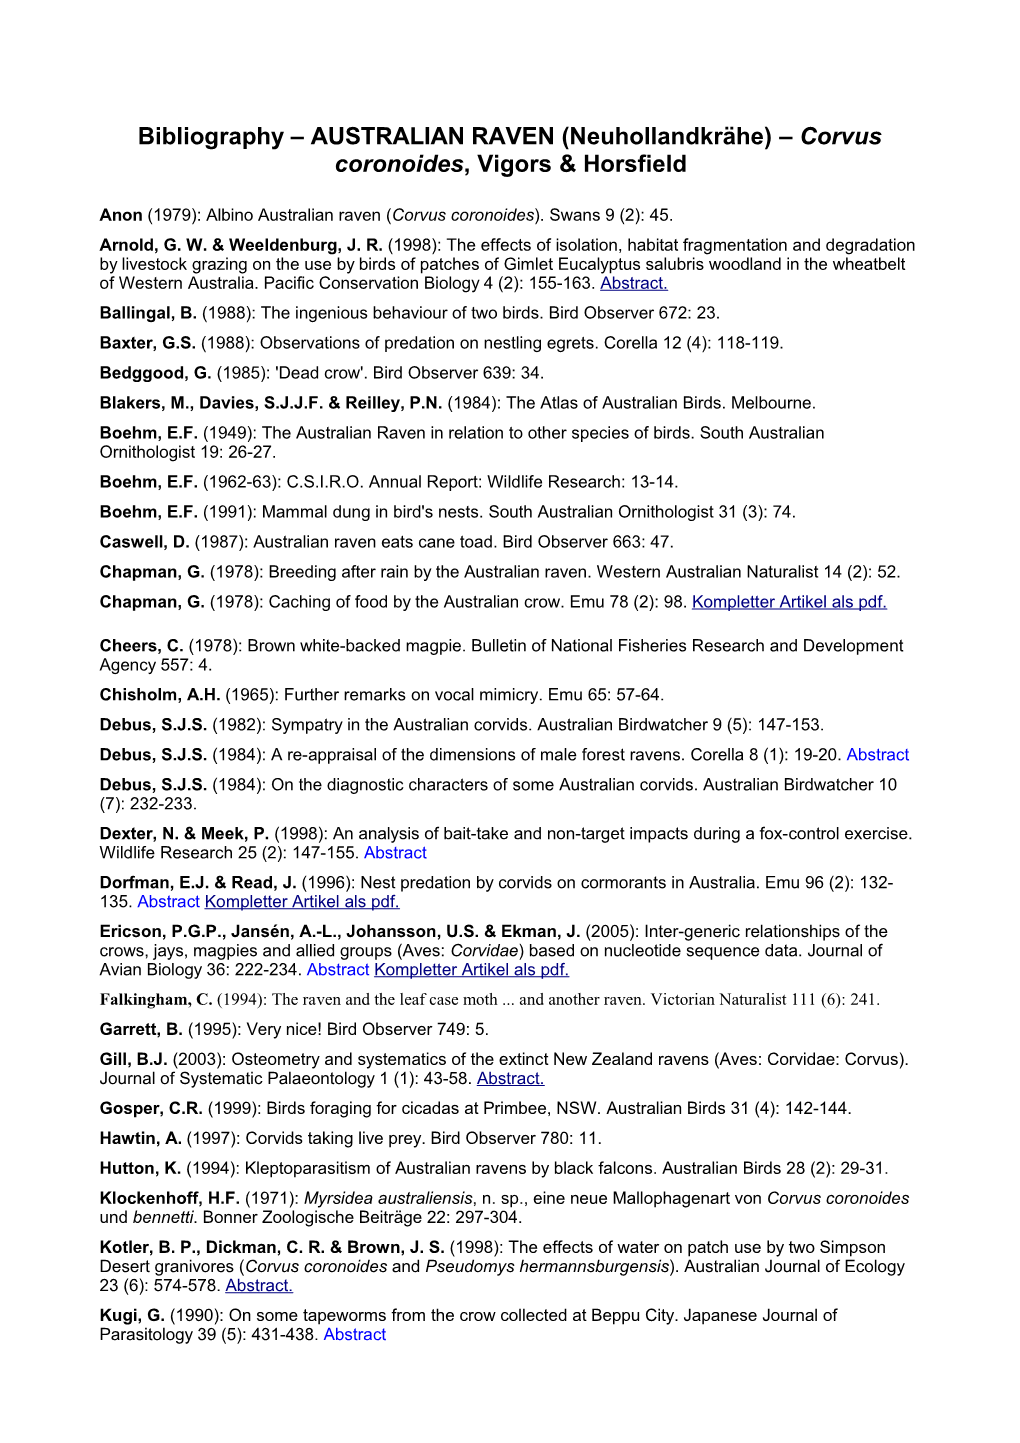 Bibliography – AUSTRALIAN RAVEN (Neuhollandkrähe) – Corvus Coronoides, Vigors & Horsfield